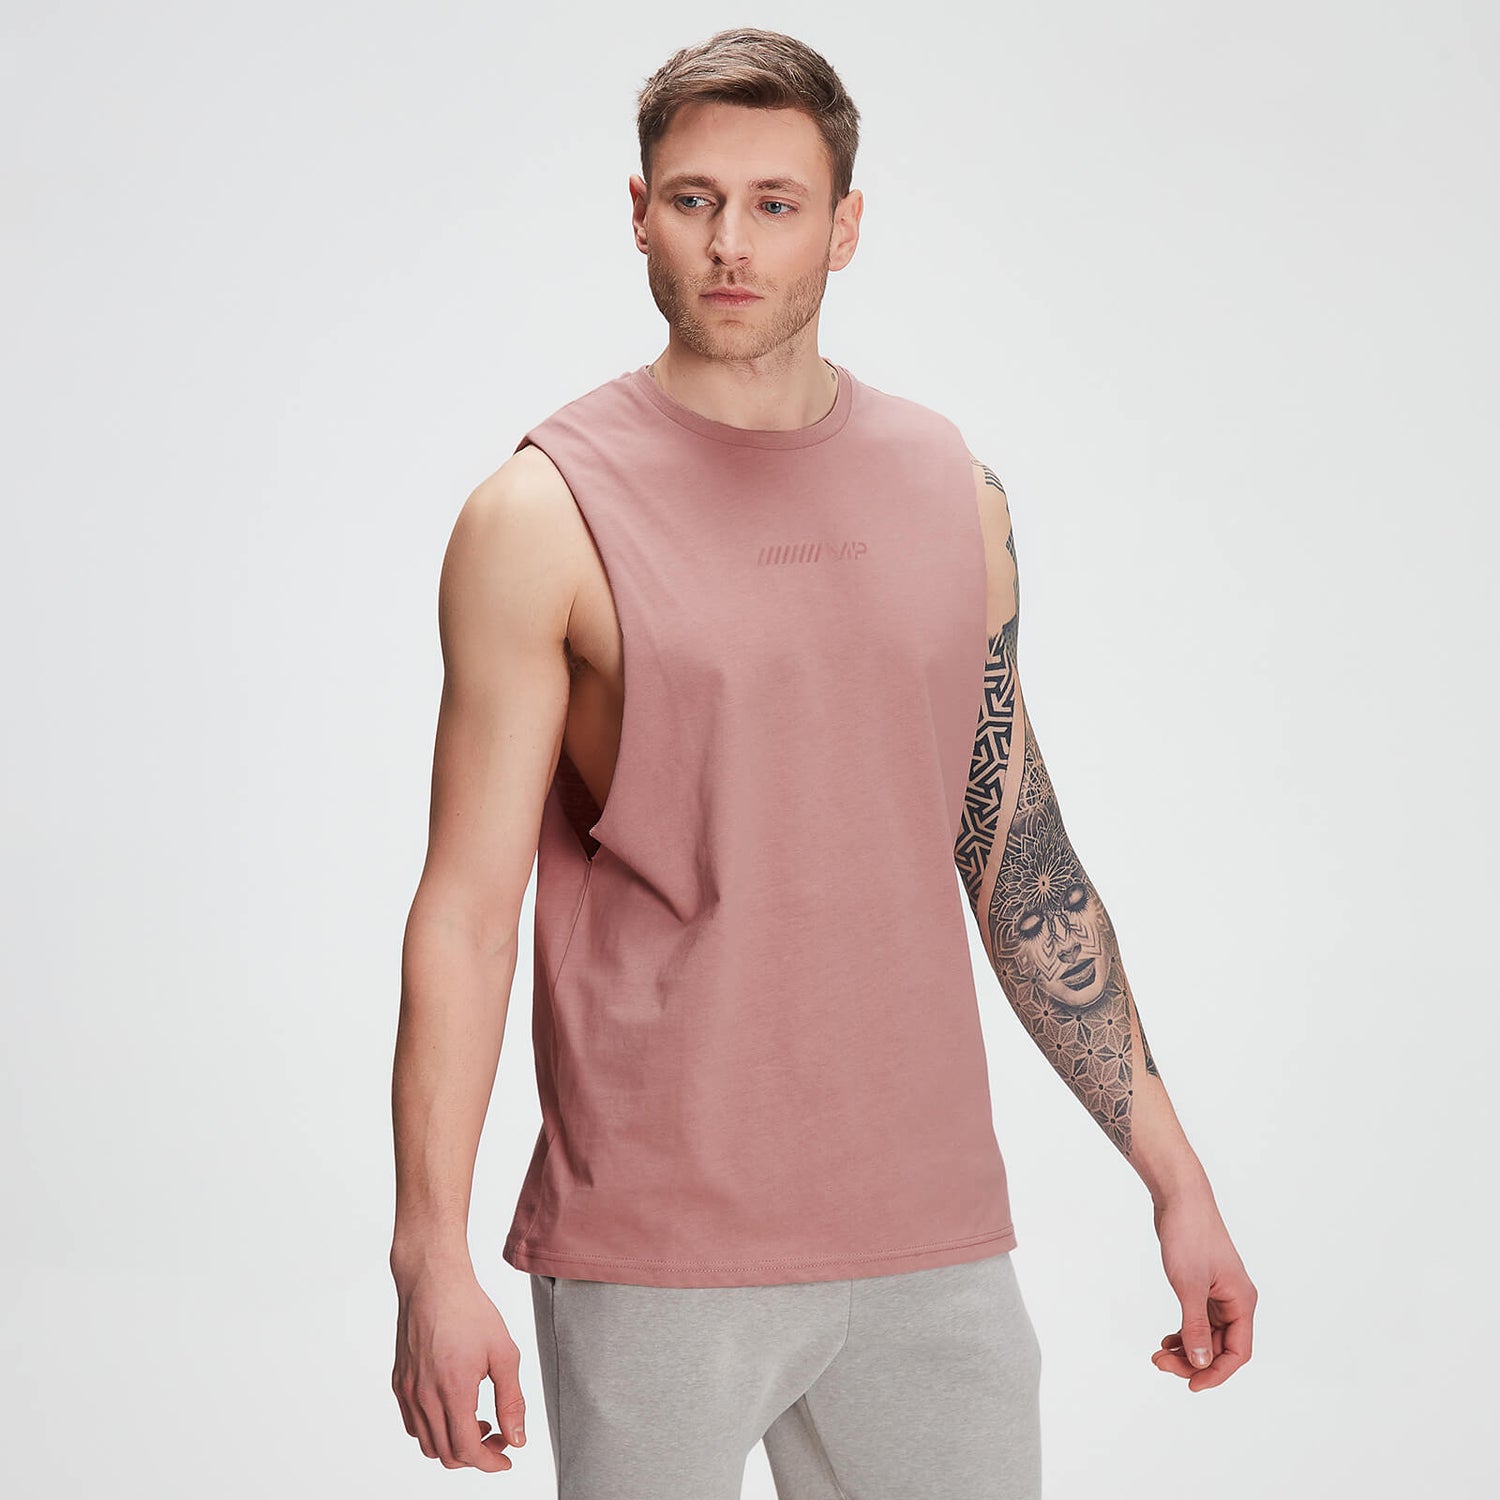 Camiseta sin mangas Tonal Graphic para hombre de MP - Rosa lavado